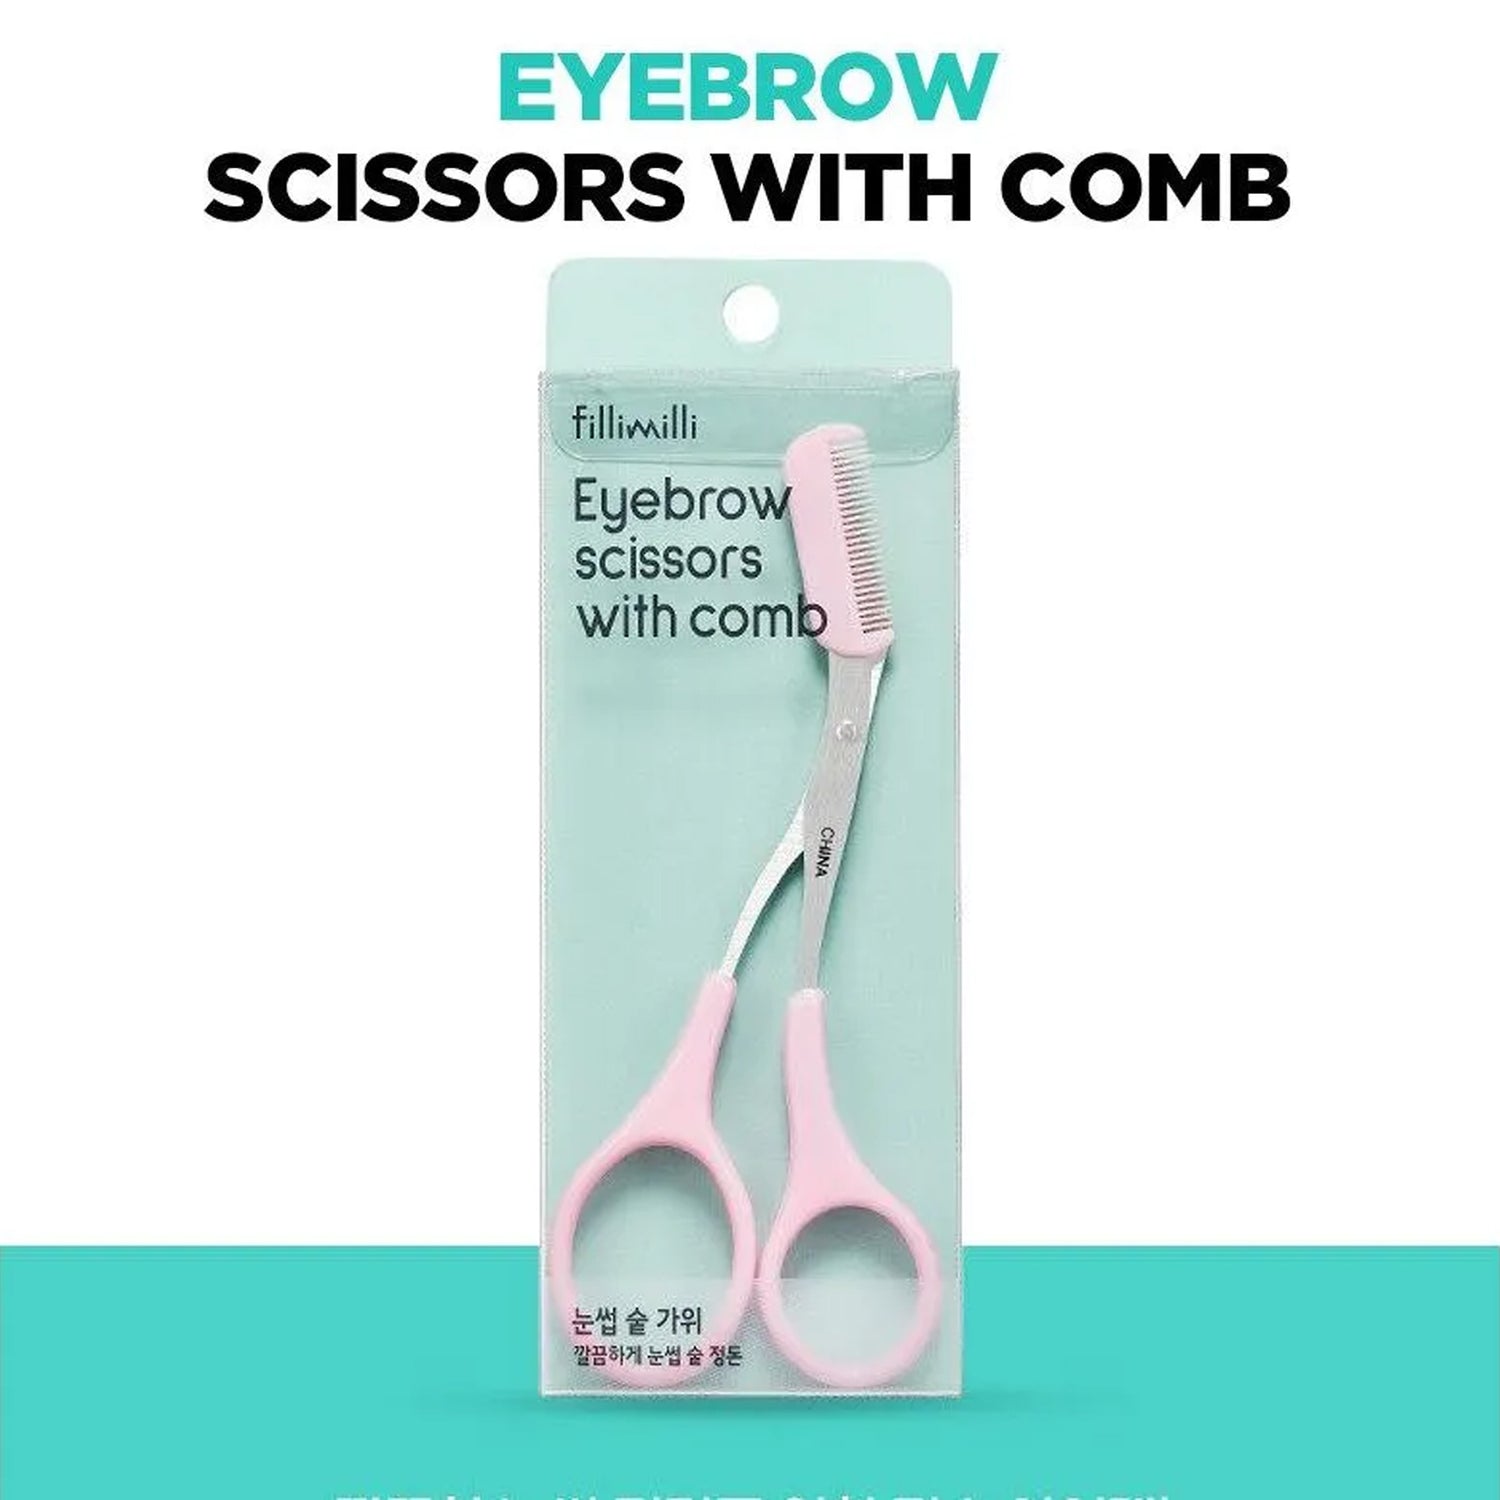 Fillimilli Eyebrow Scissors With Comb